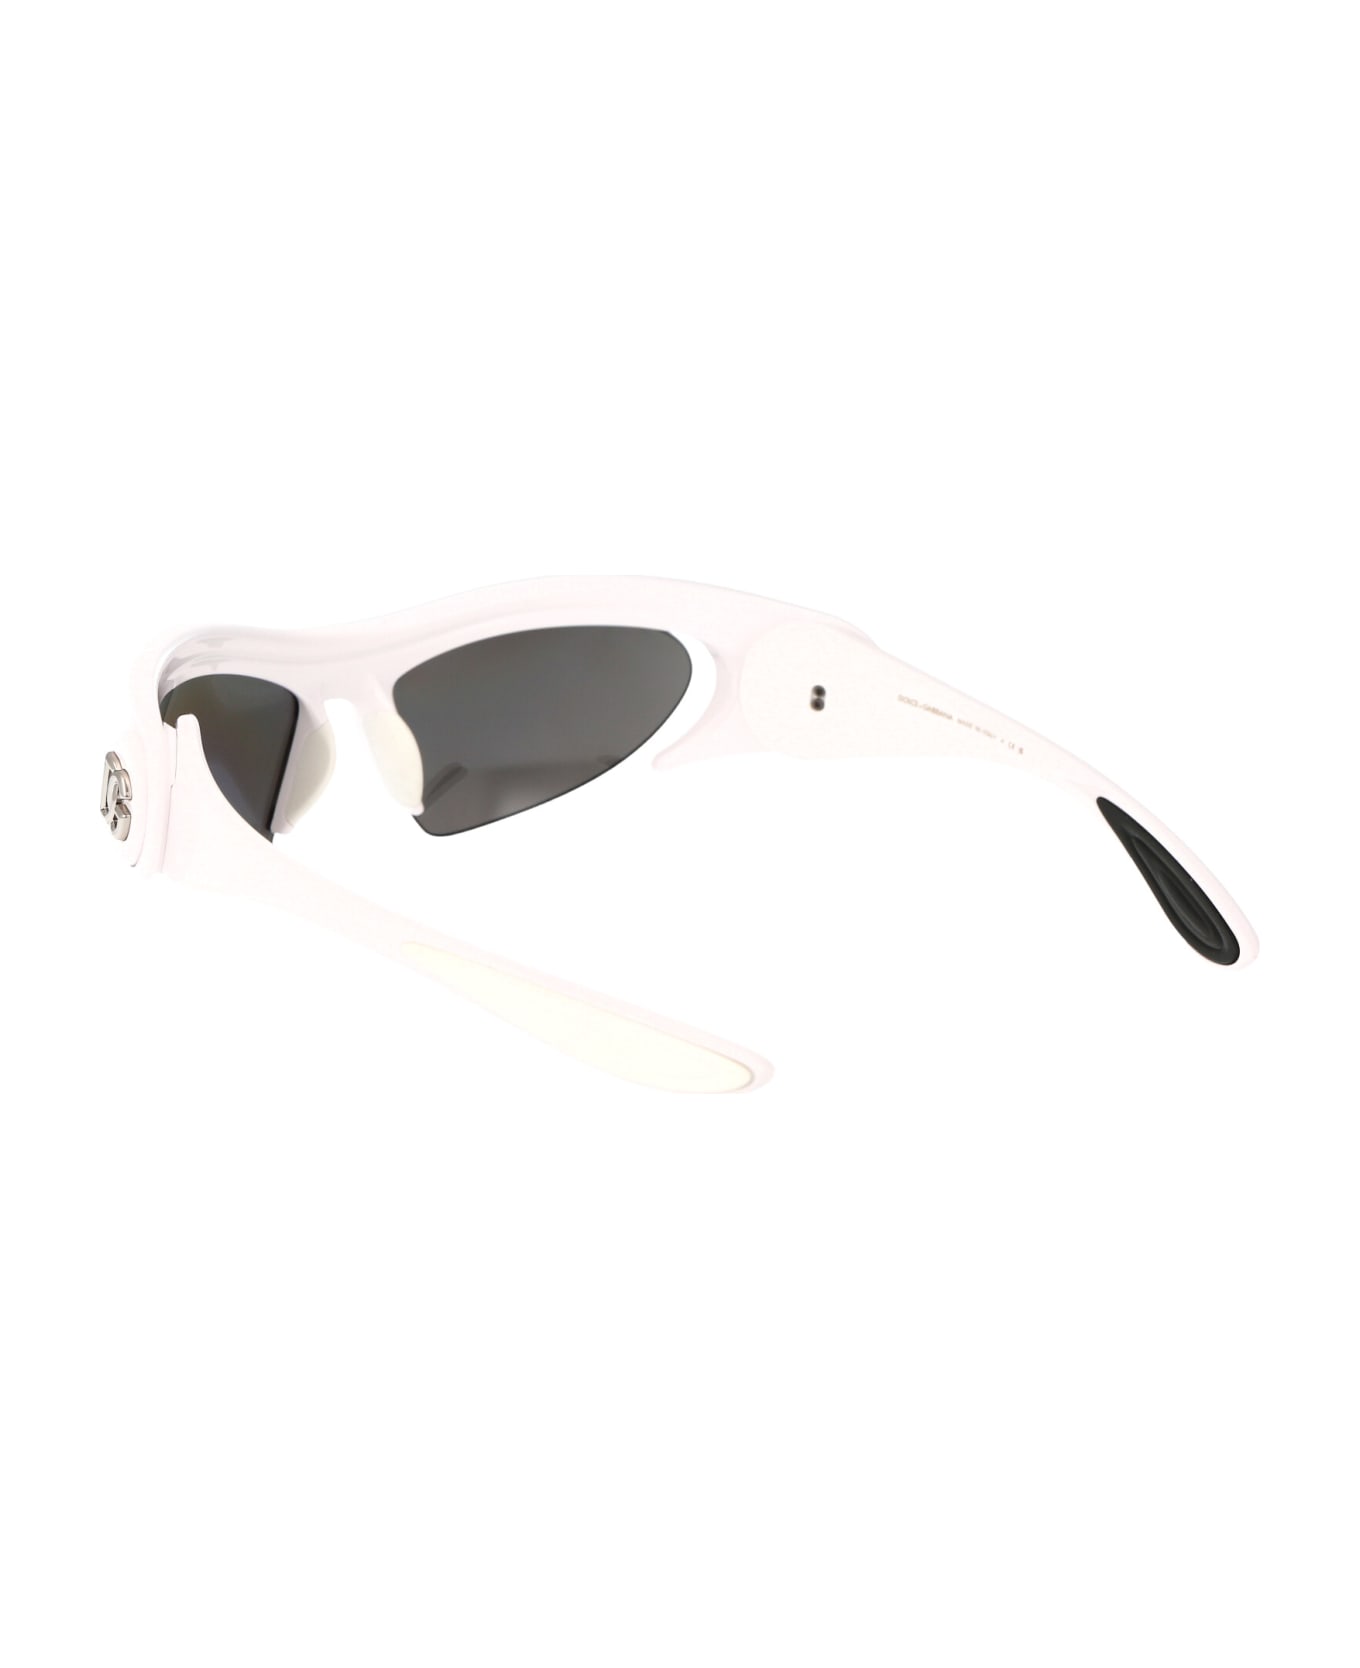 Dolce & Gabbana Eyewear 0dg6192 Sunglasses - 33126G White